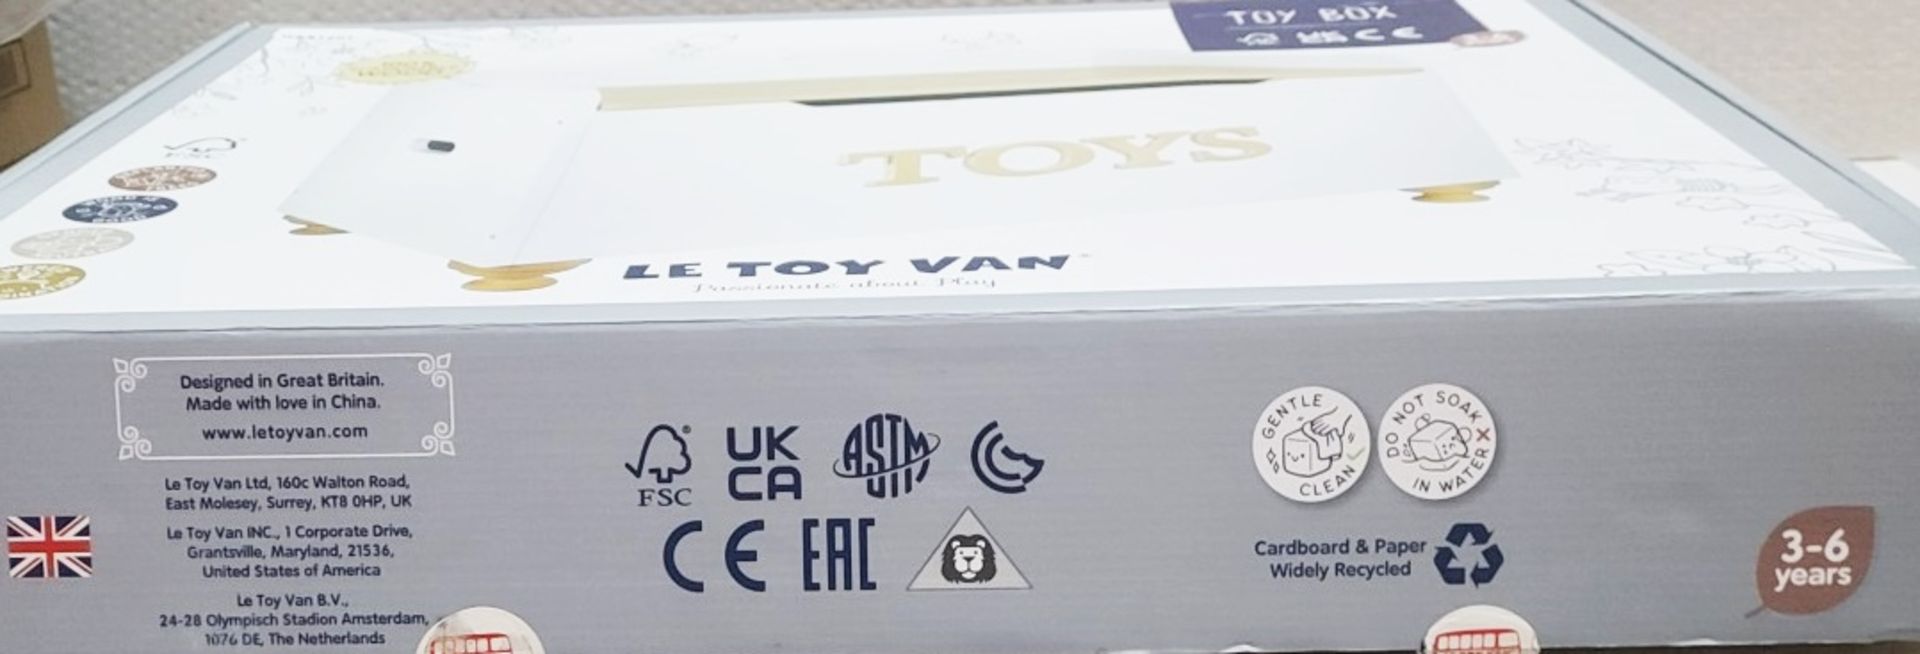 1 x LE TOY VAN Wooden Toy Box - Original Price £69.95 - Image 4 of 5